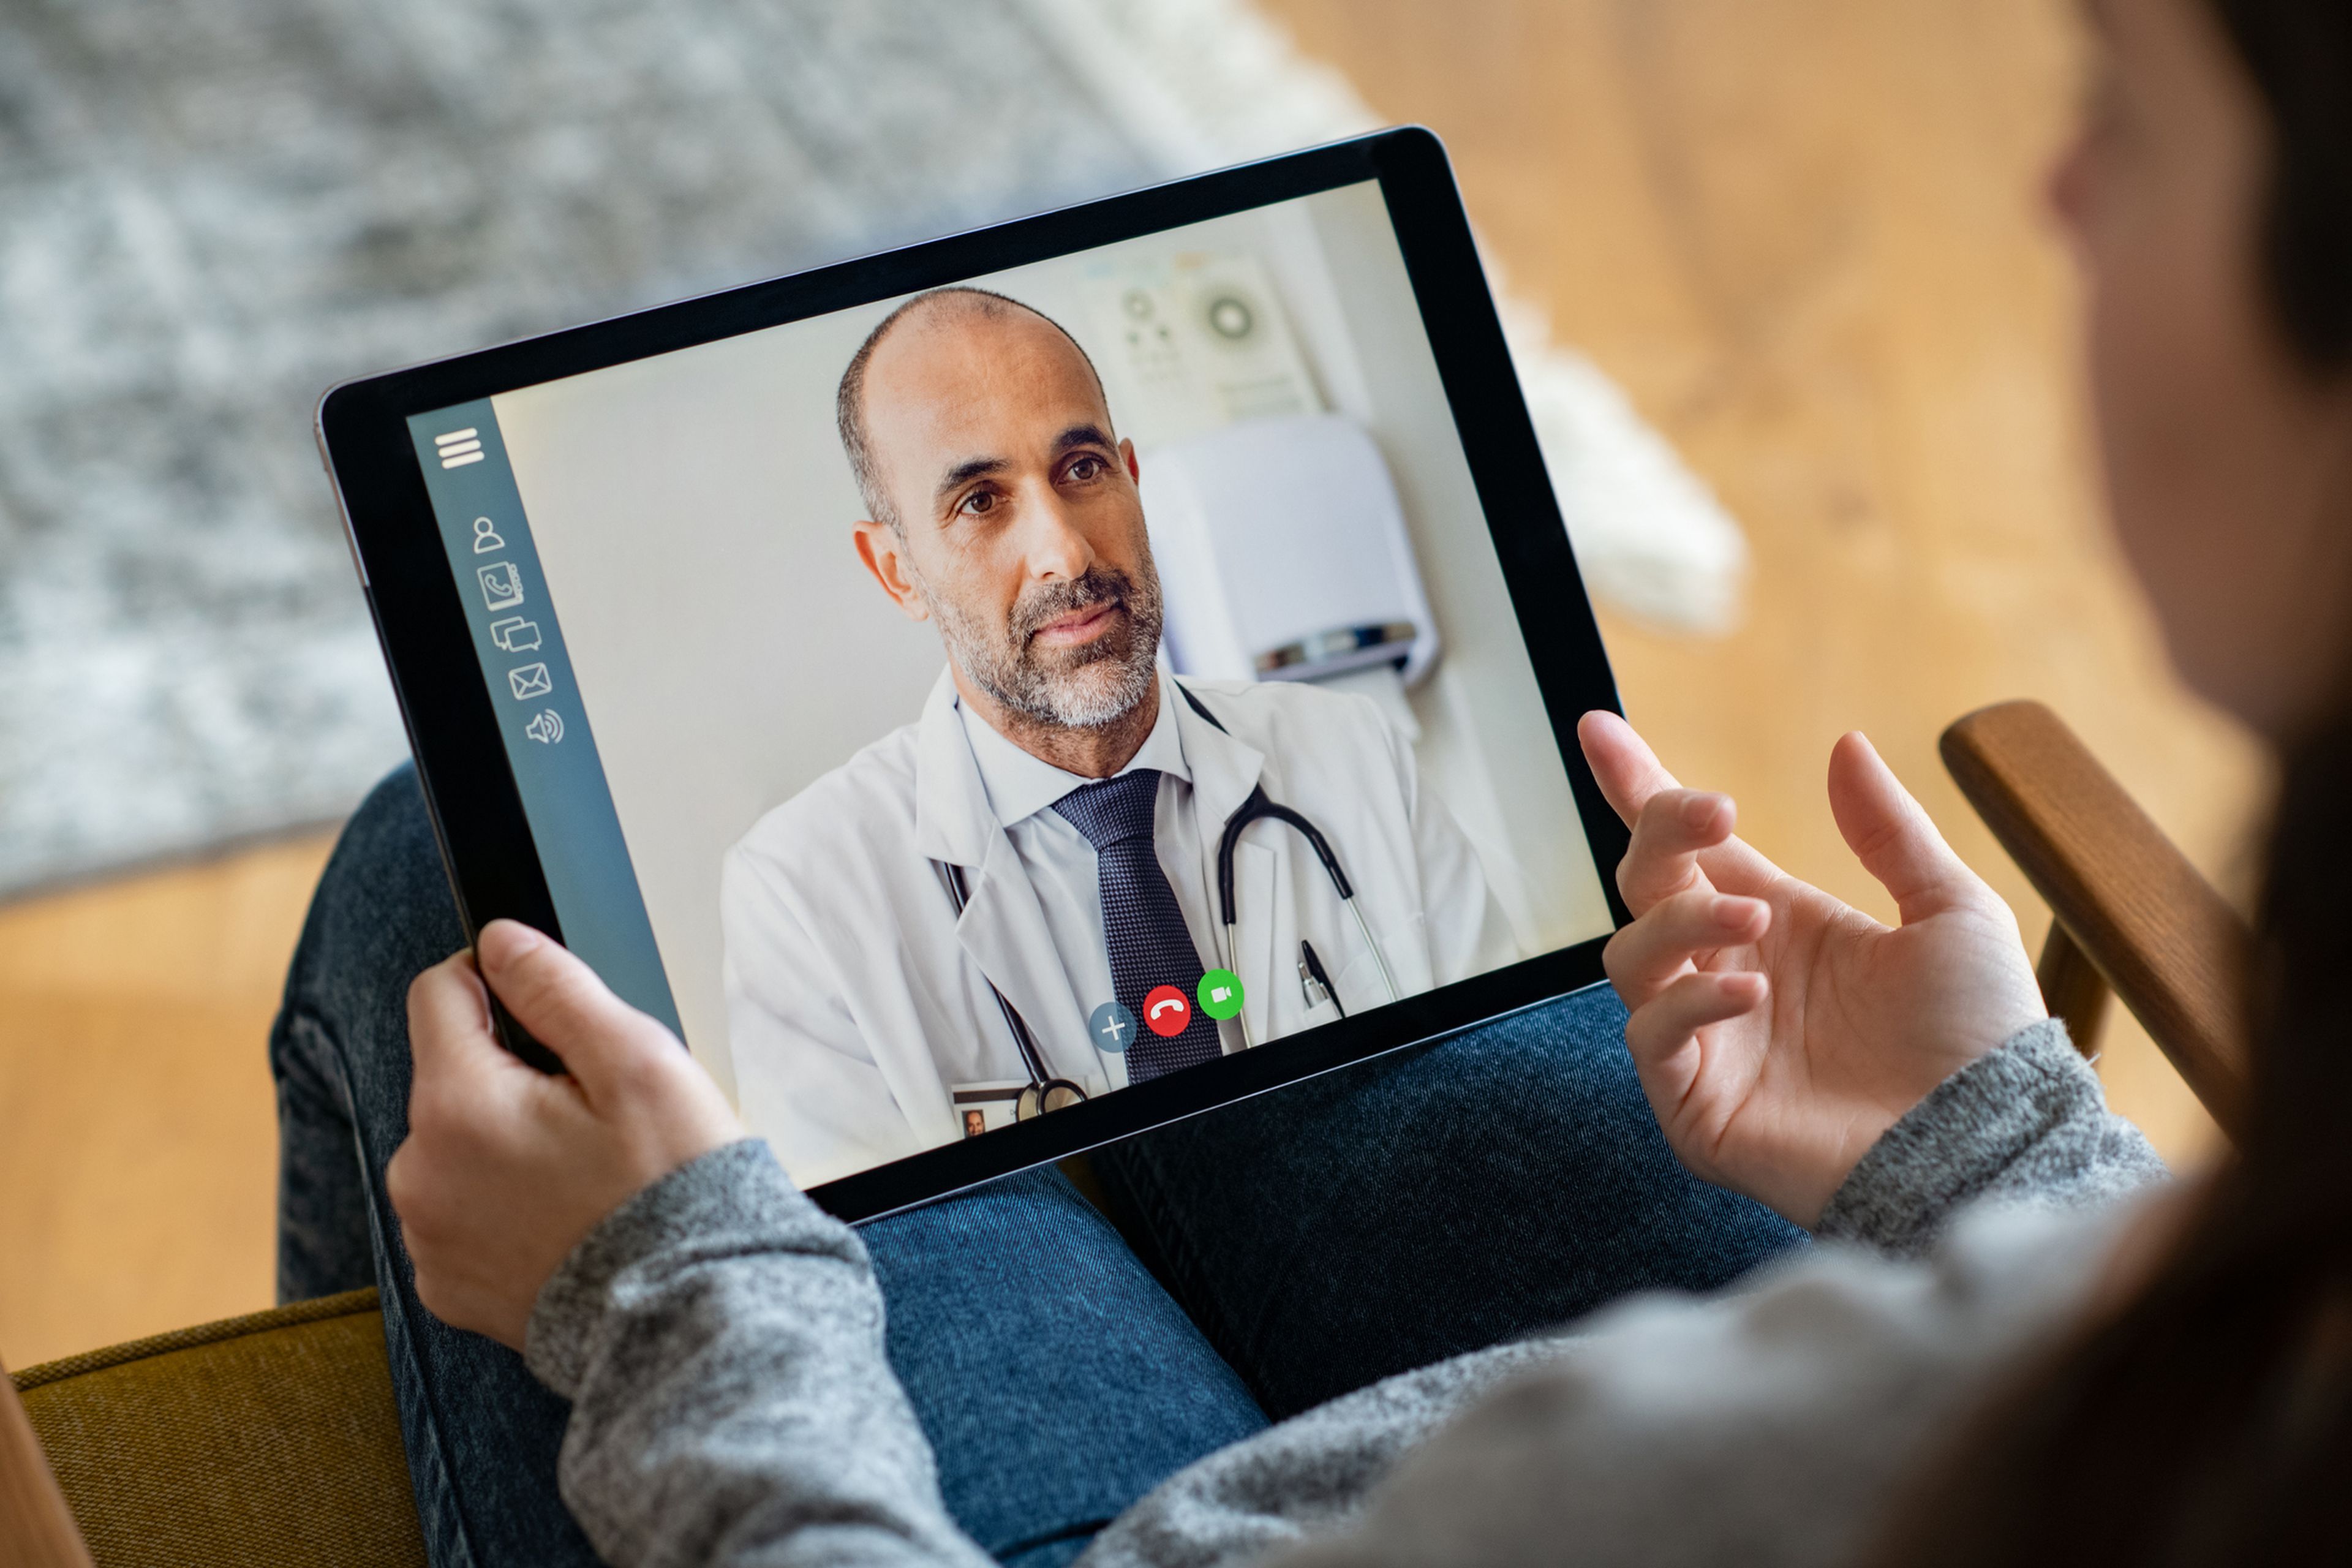 consulta médica online, por videollamada